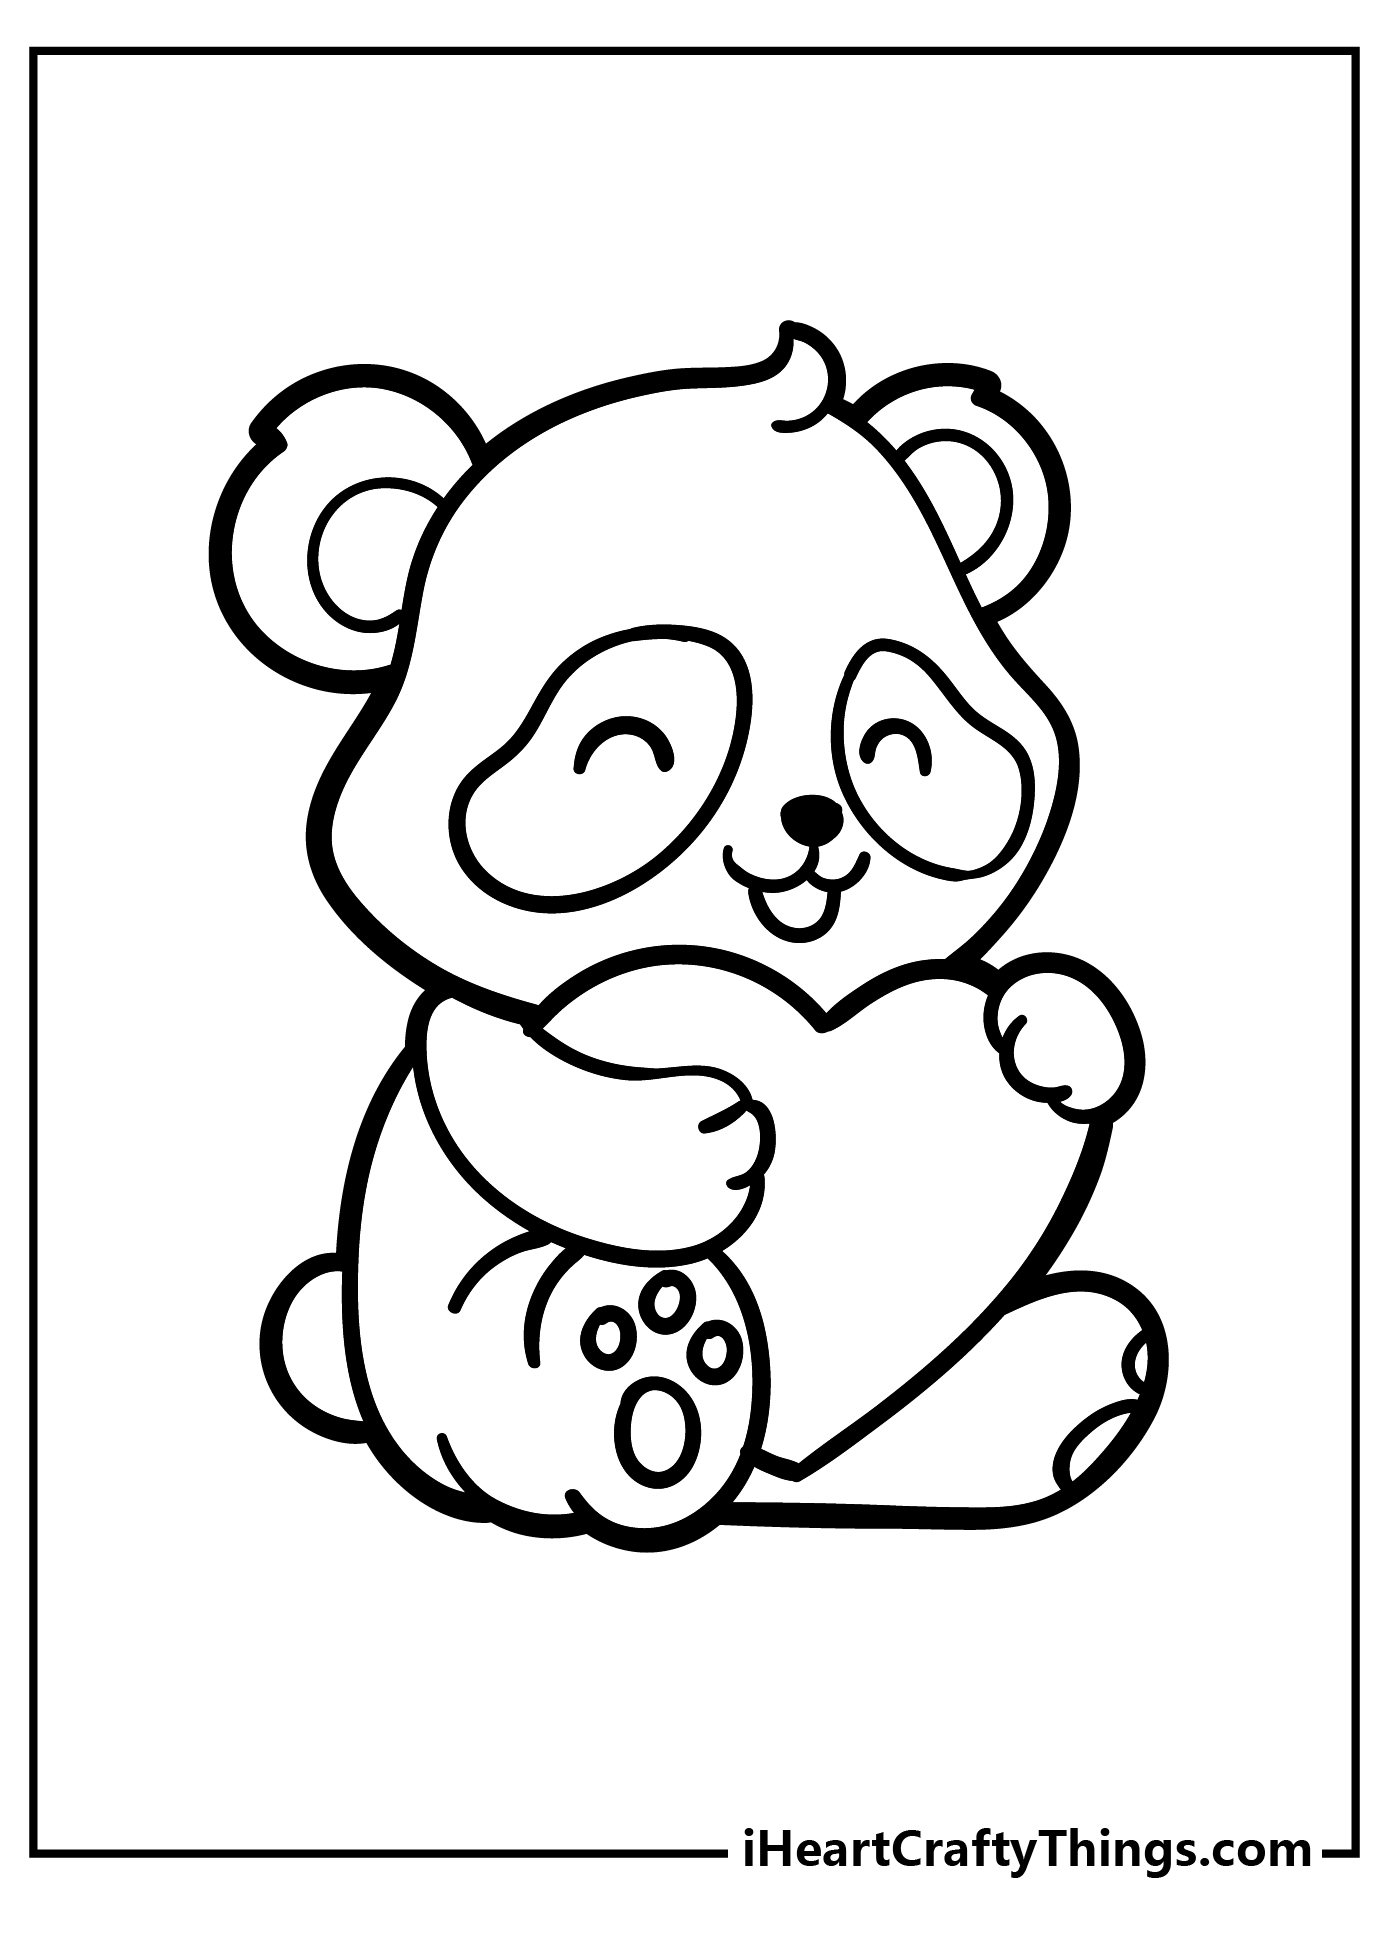 Panda coloring pages free printables